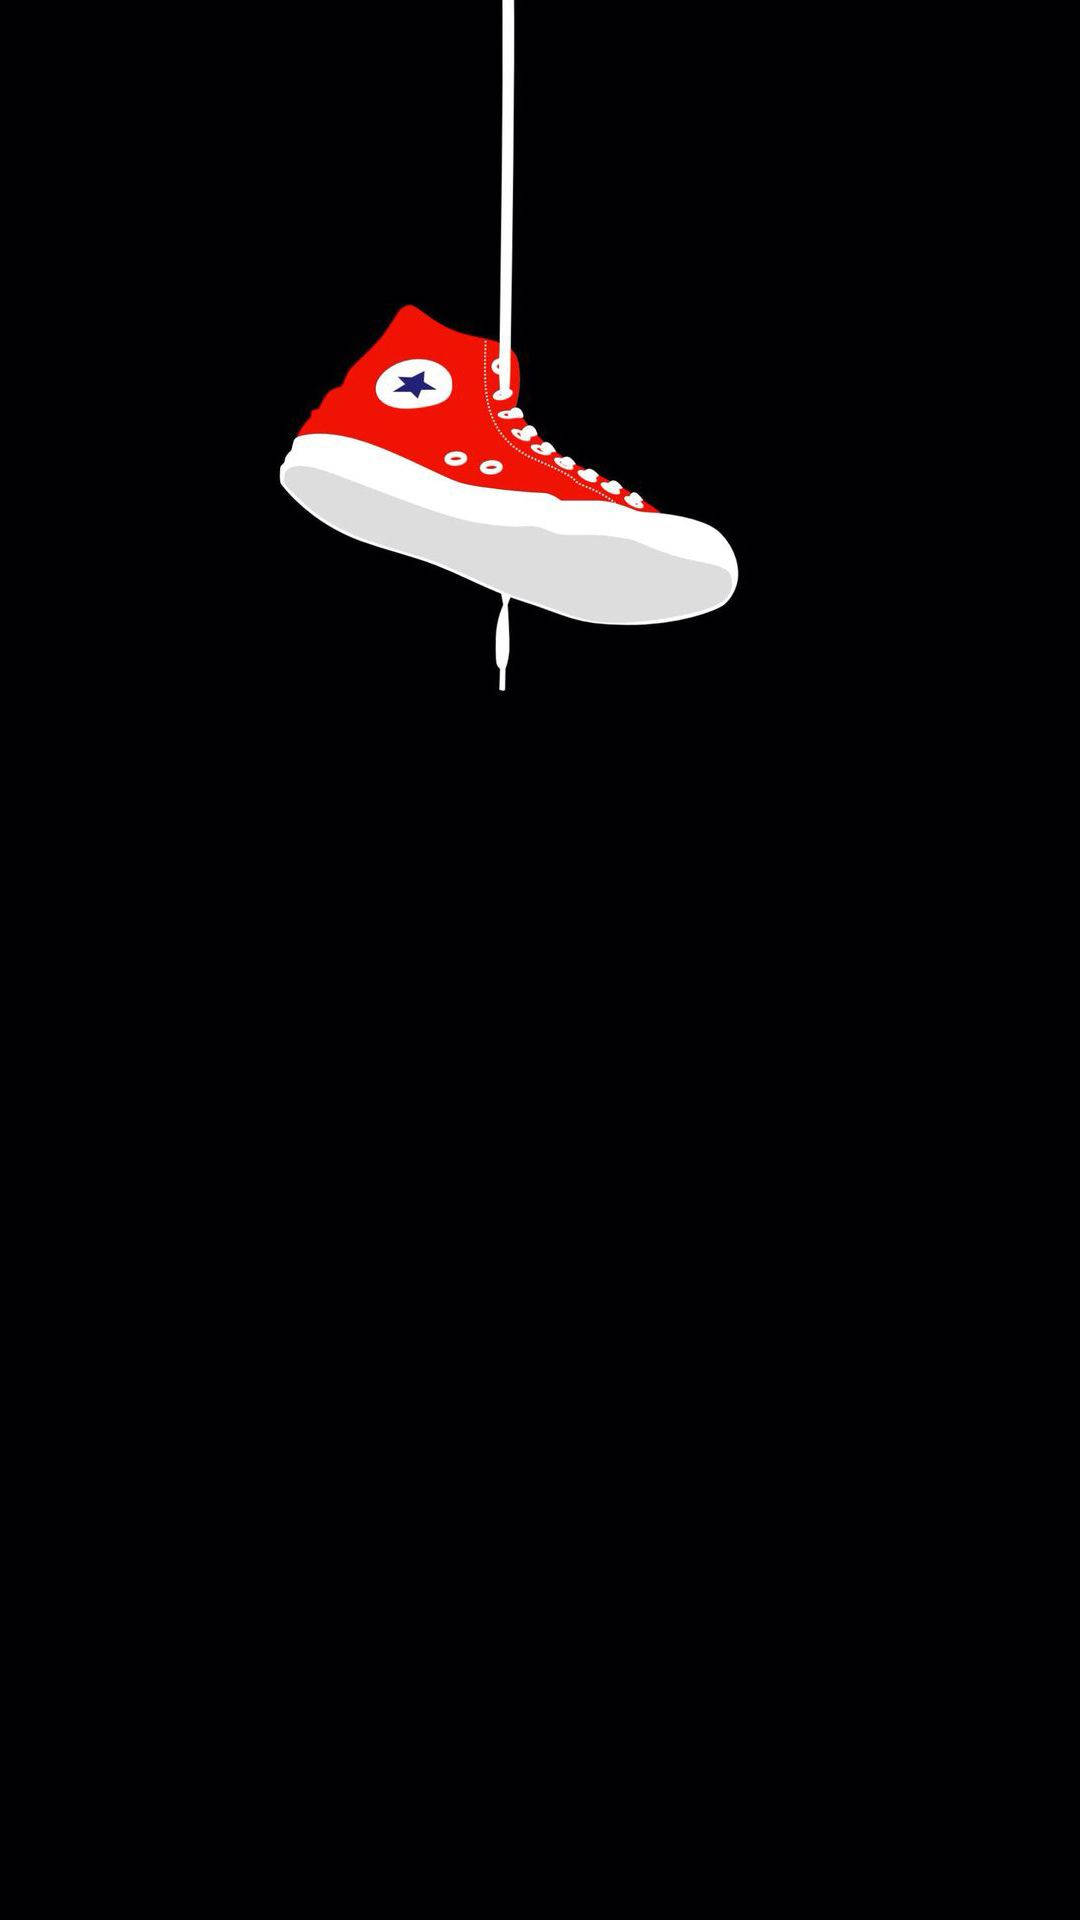 Sneaker Converse Hangs By Shoelace